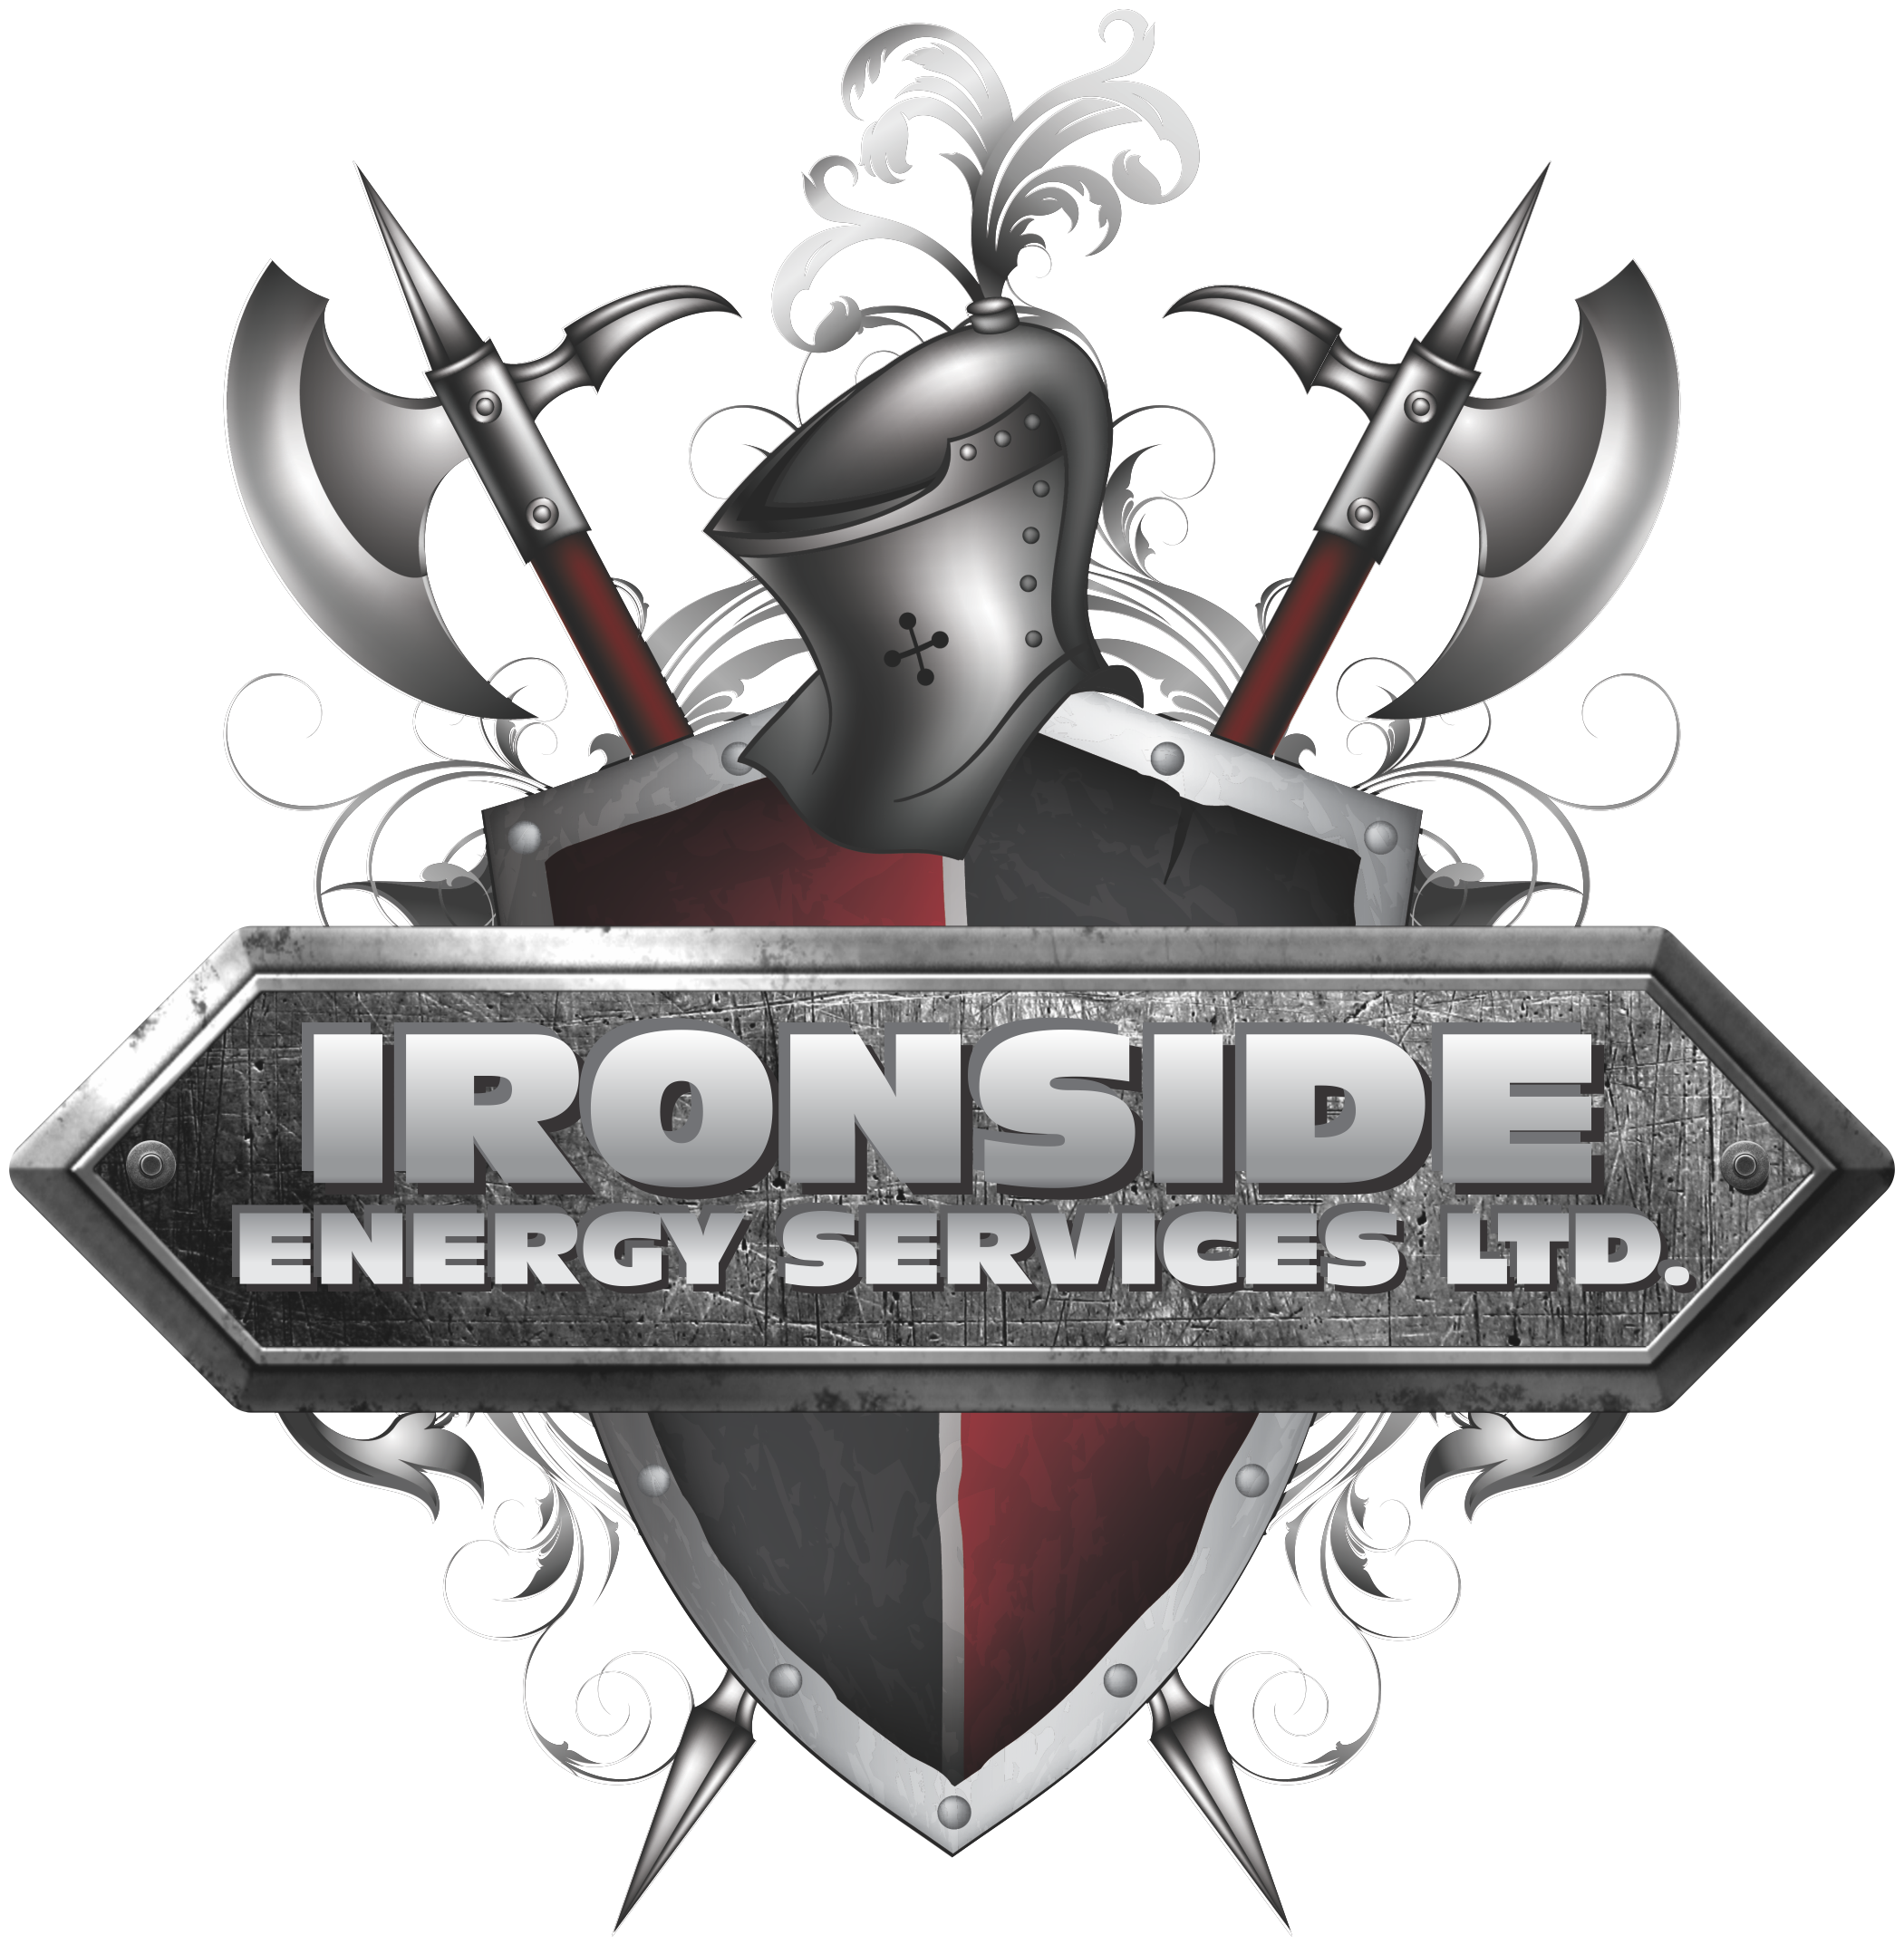 Ironside Energy Services Ltd.